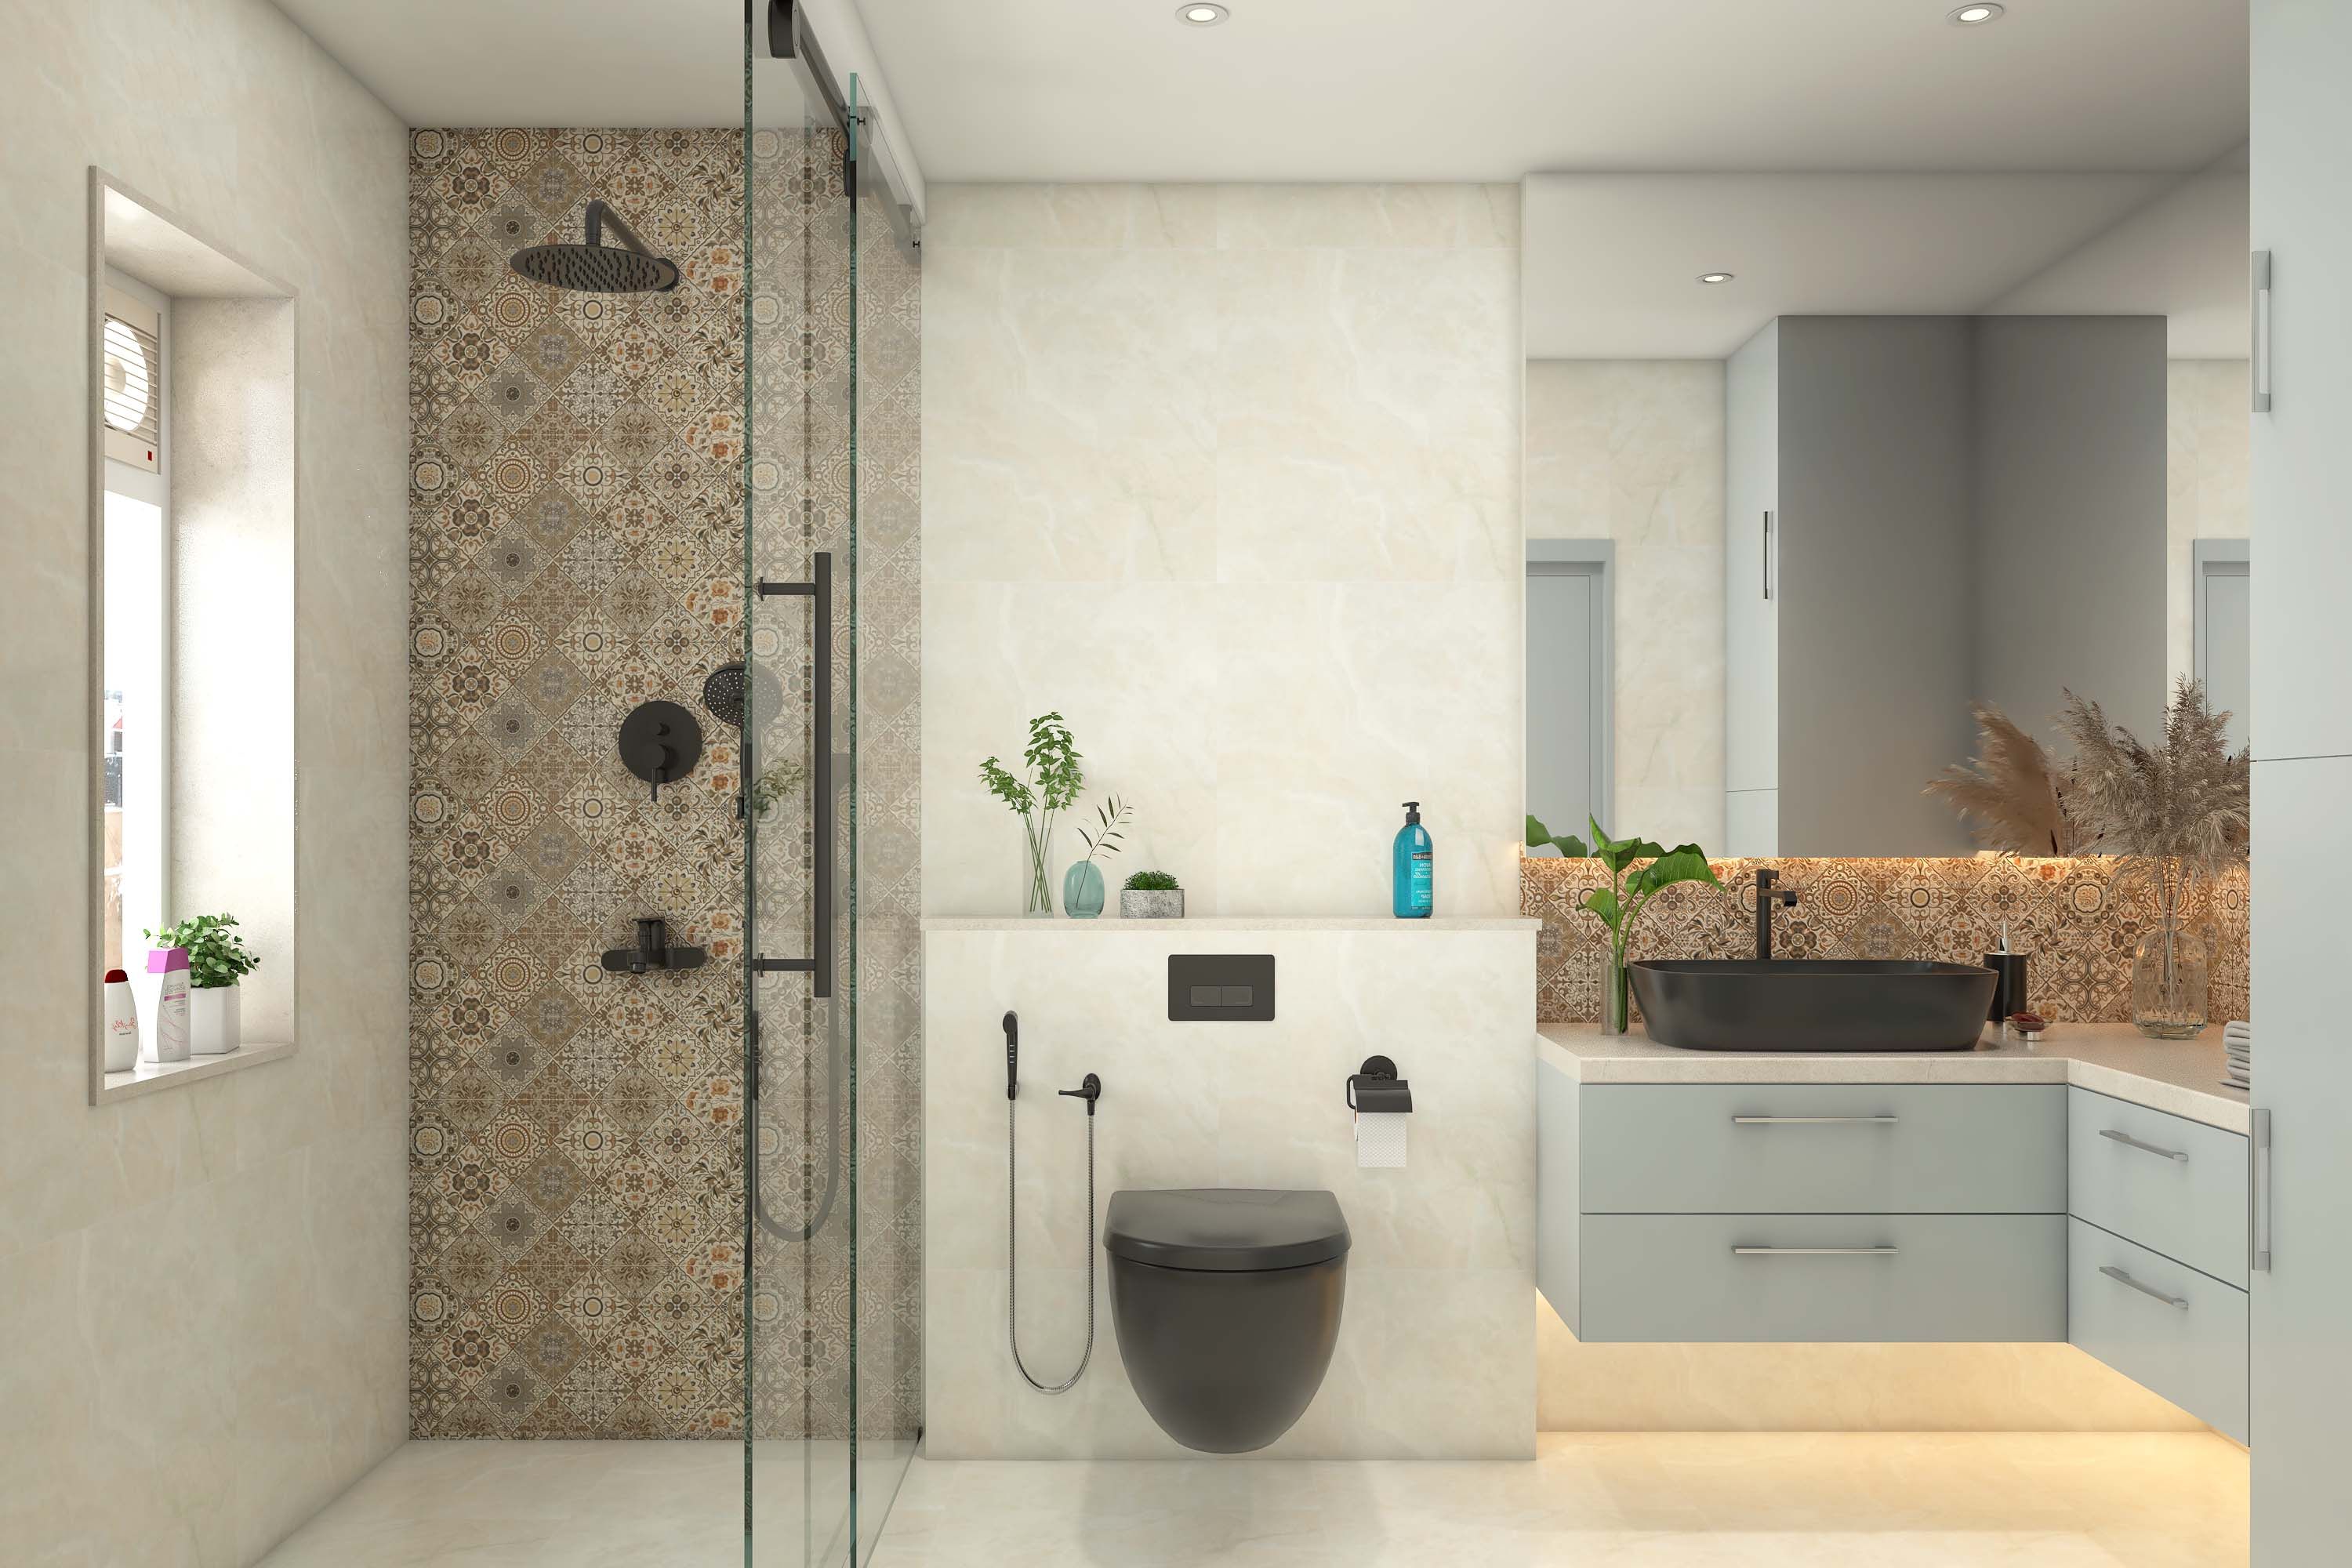 Contemporary Bathroom Design With Aesthetic Look